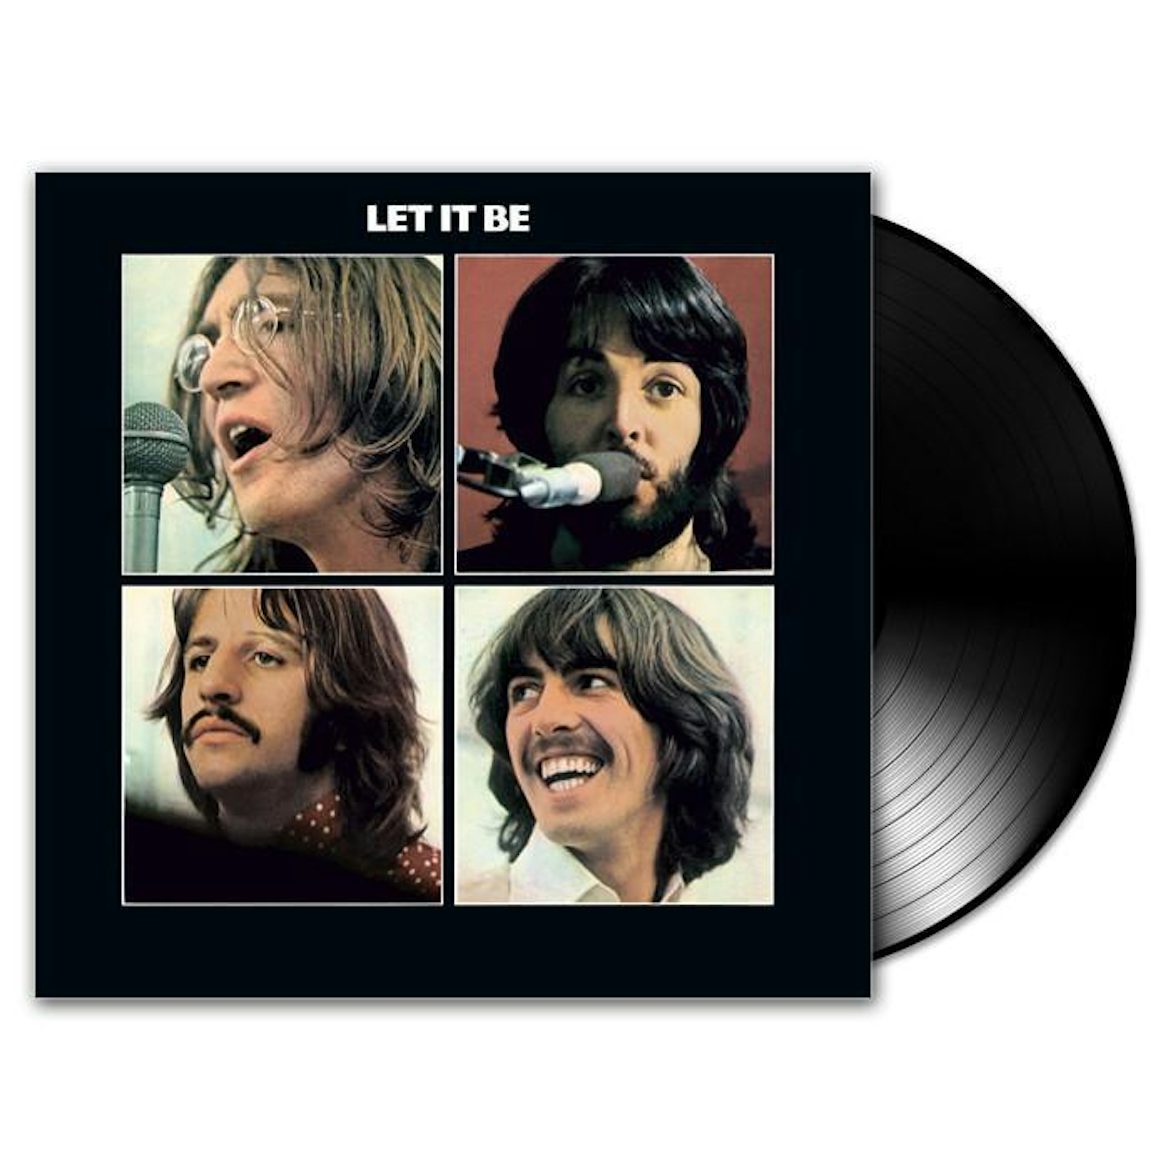 Лет ит би слушать. The Beatles Let it be обложка. Обложка альбома Битлз Let it be. LP Beatles, the: Let it be. The Beatles Let it be пластинка.